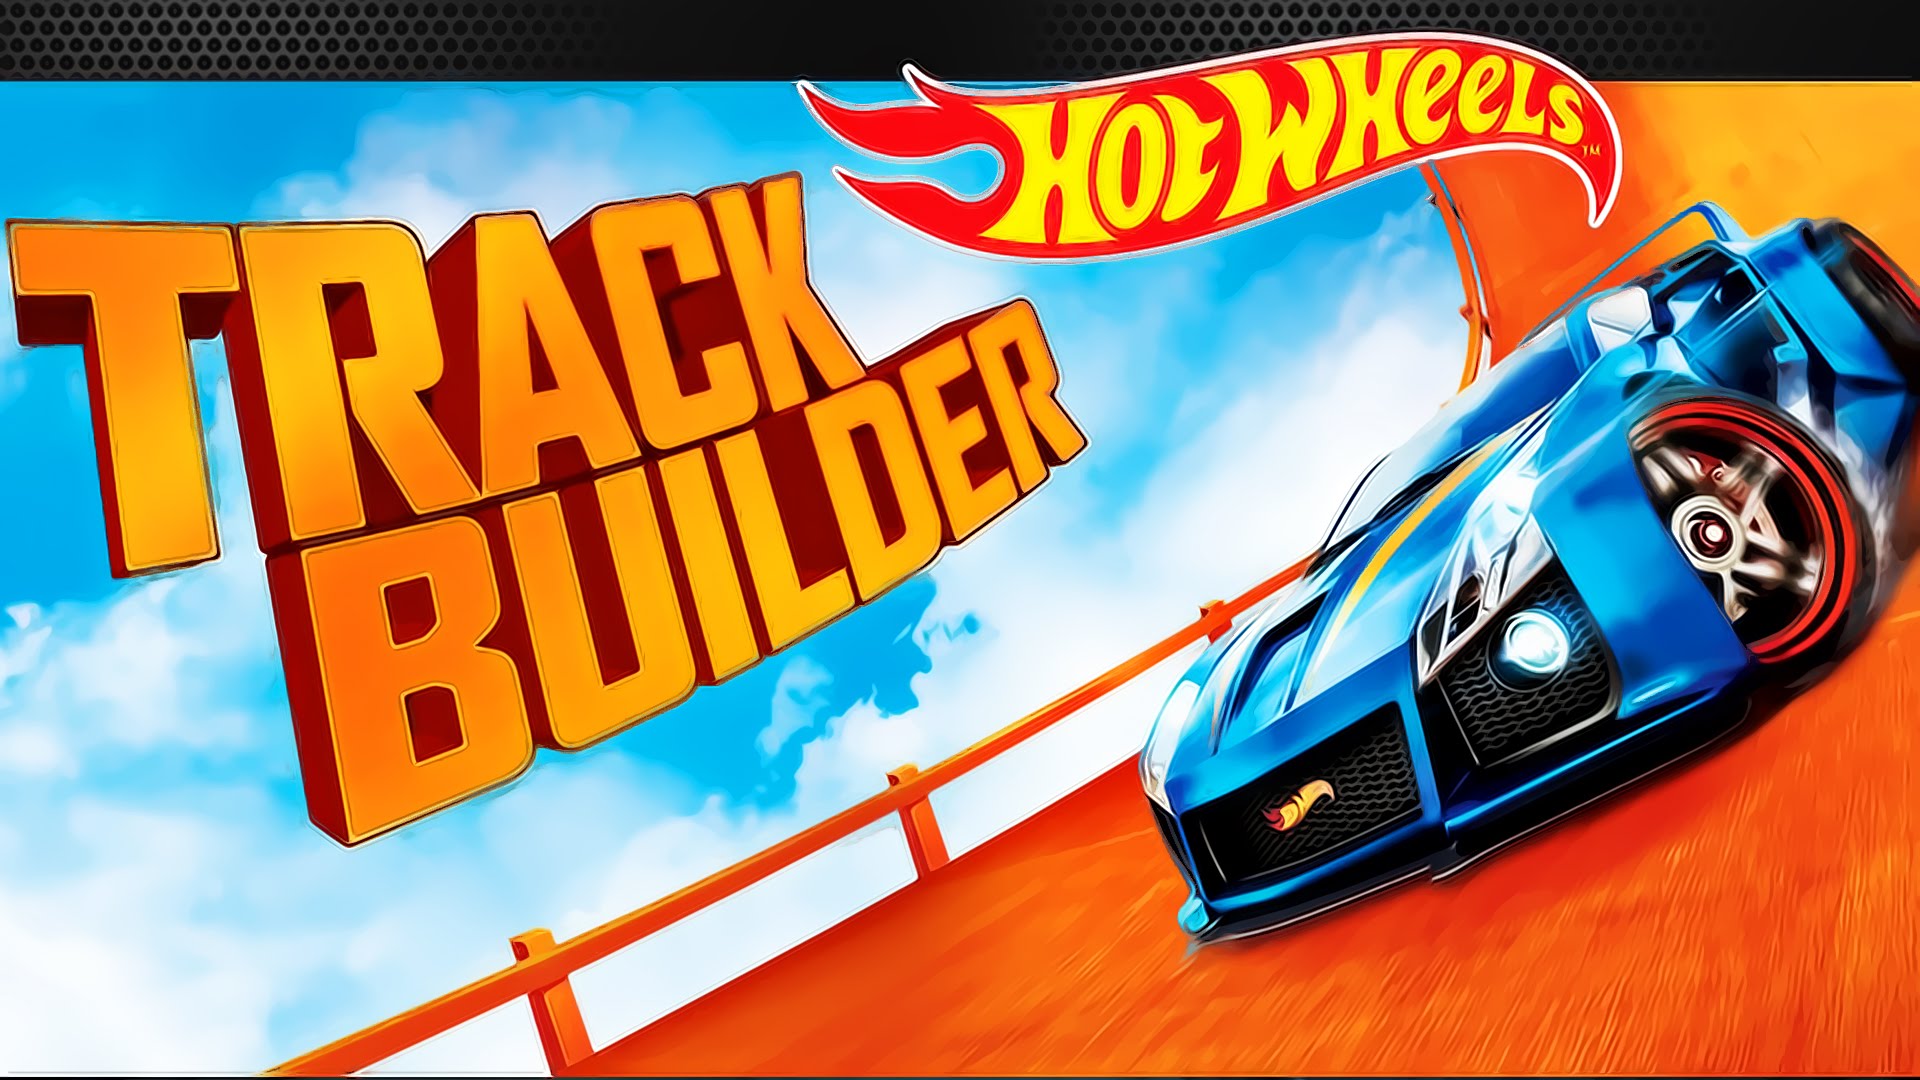 Hot Wheels New Track Builder 2015 - HD ! - YouTube